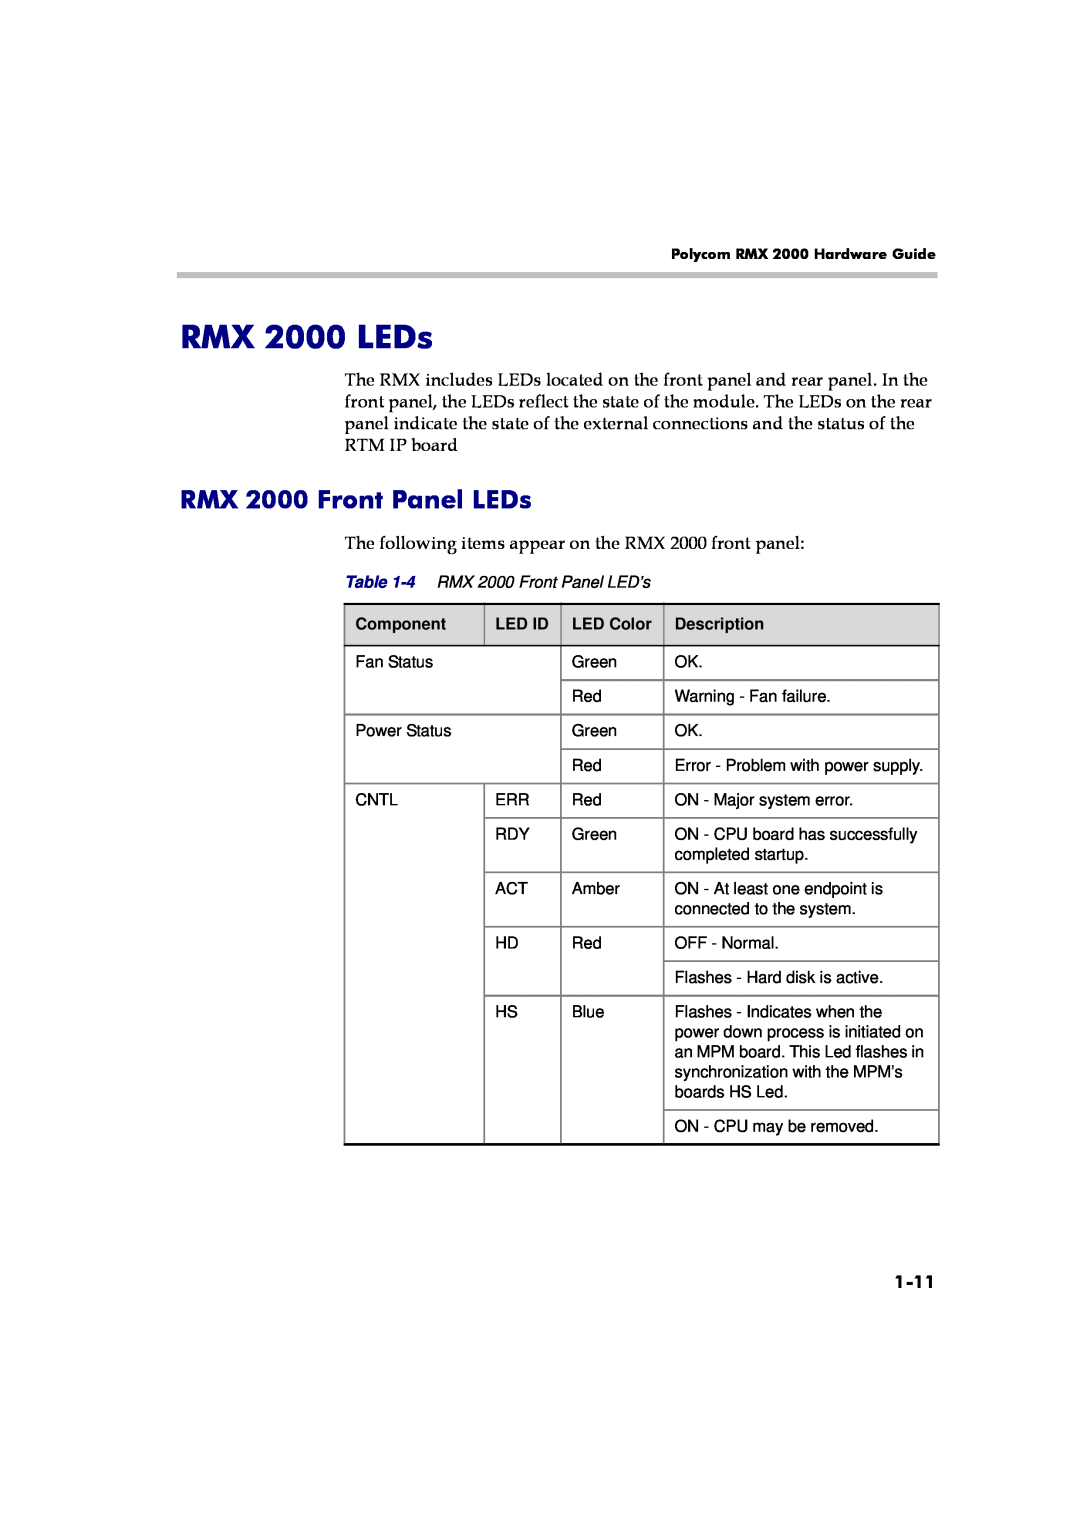 Polycom manual RMX 2000 LEDs, RMX 2000 Front Panel LEDs, 1-11 